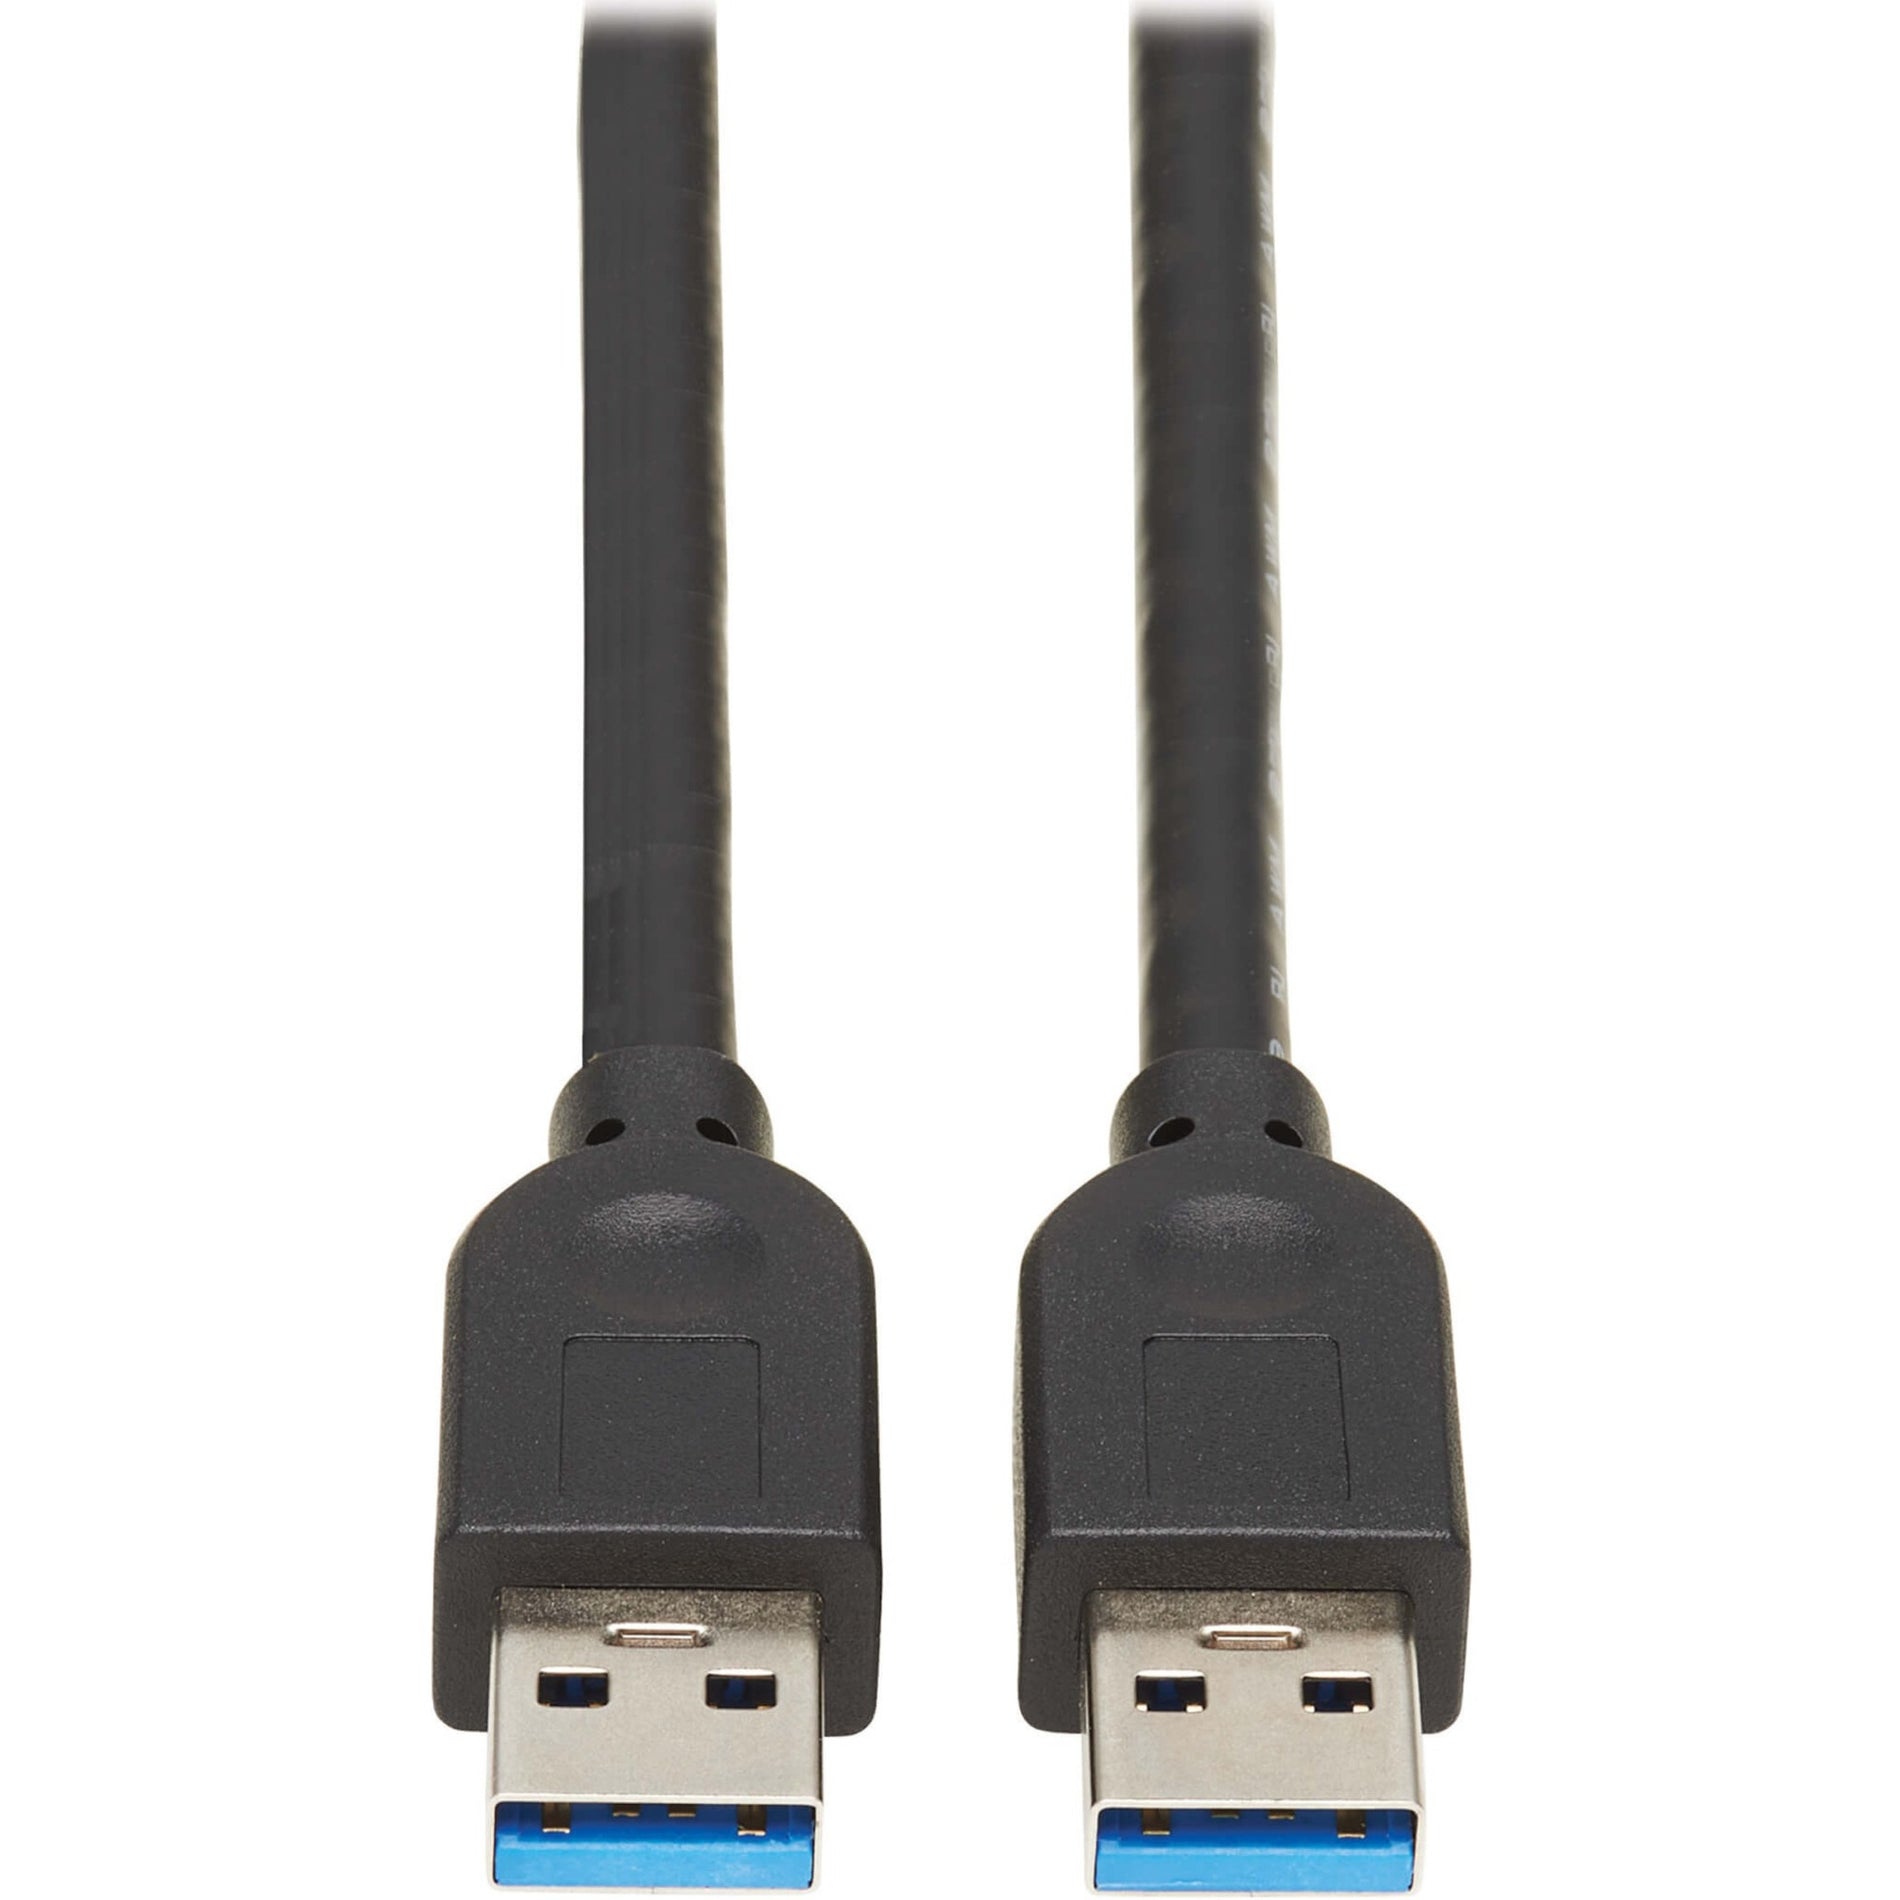 Tripp Lite U325-010 USB 3.0 SuperSpeed A/A Cable (M/M), Black, 10 ft.